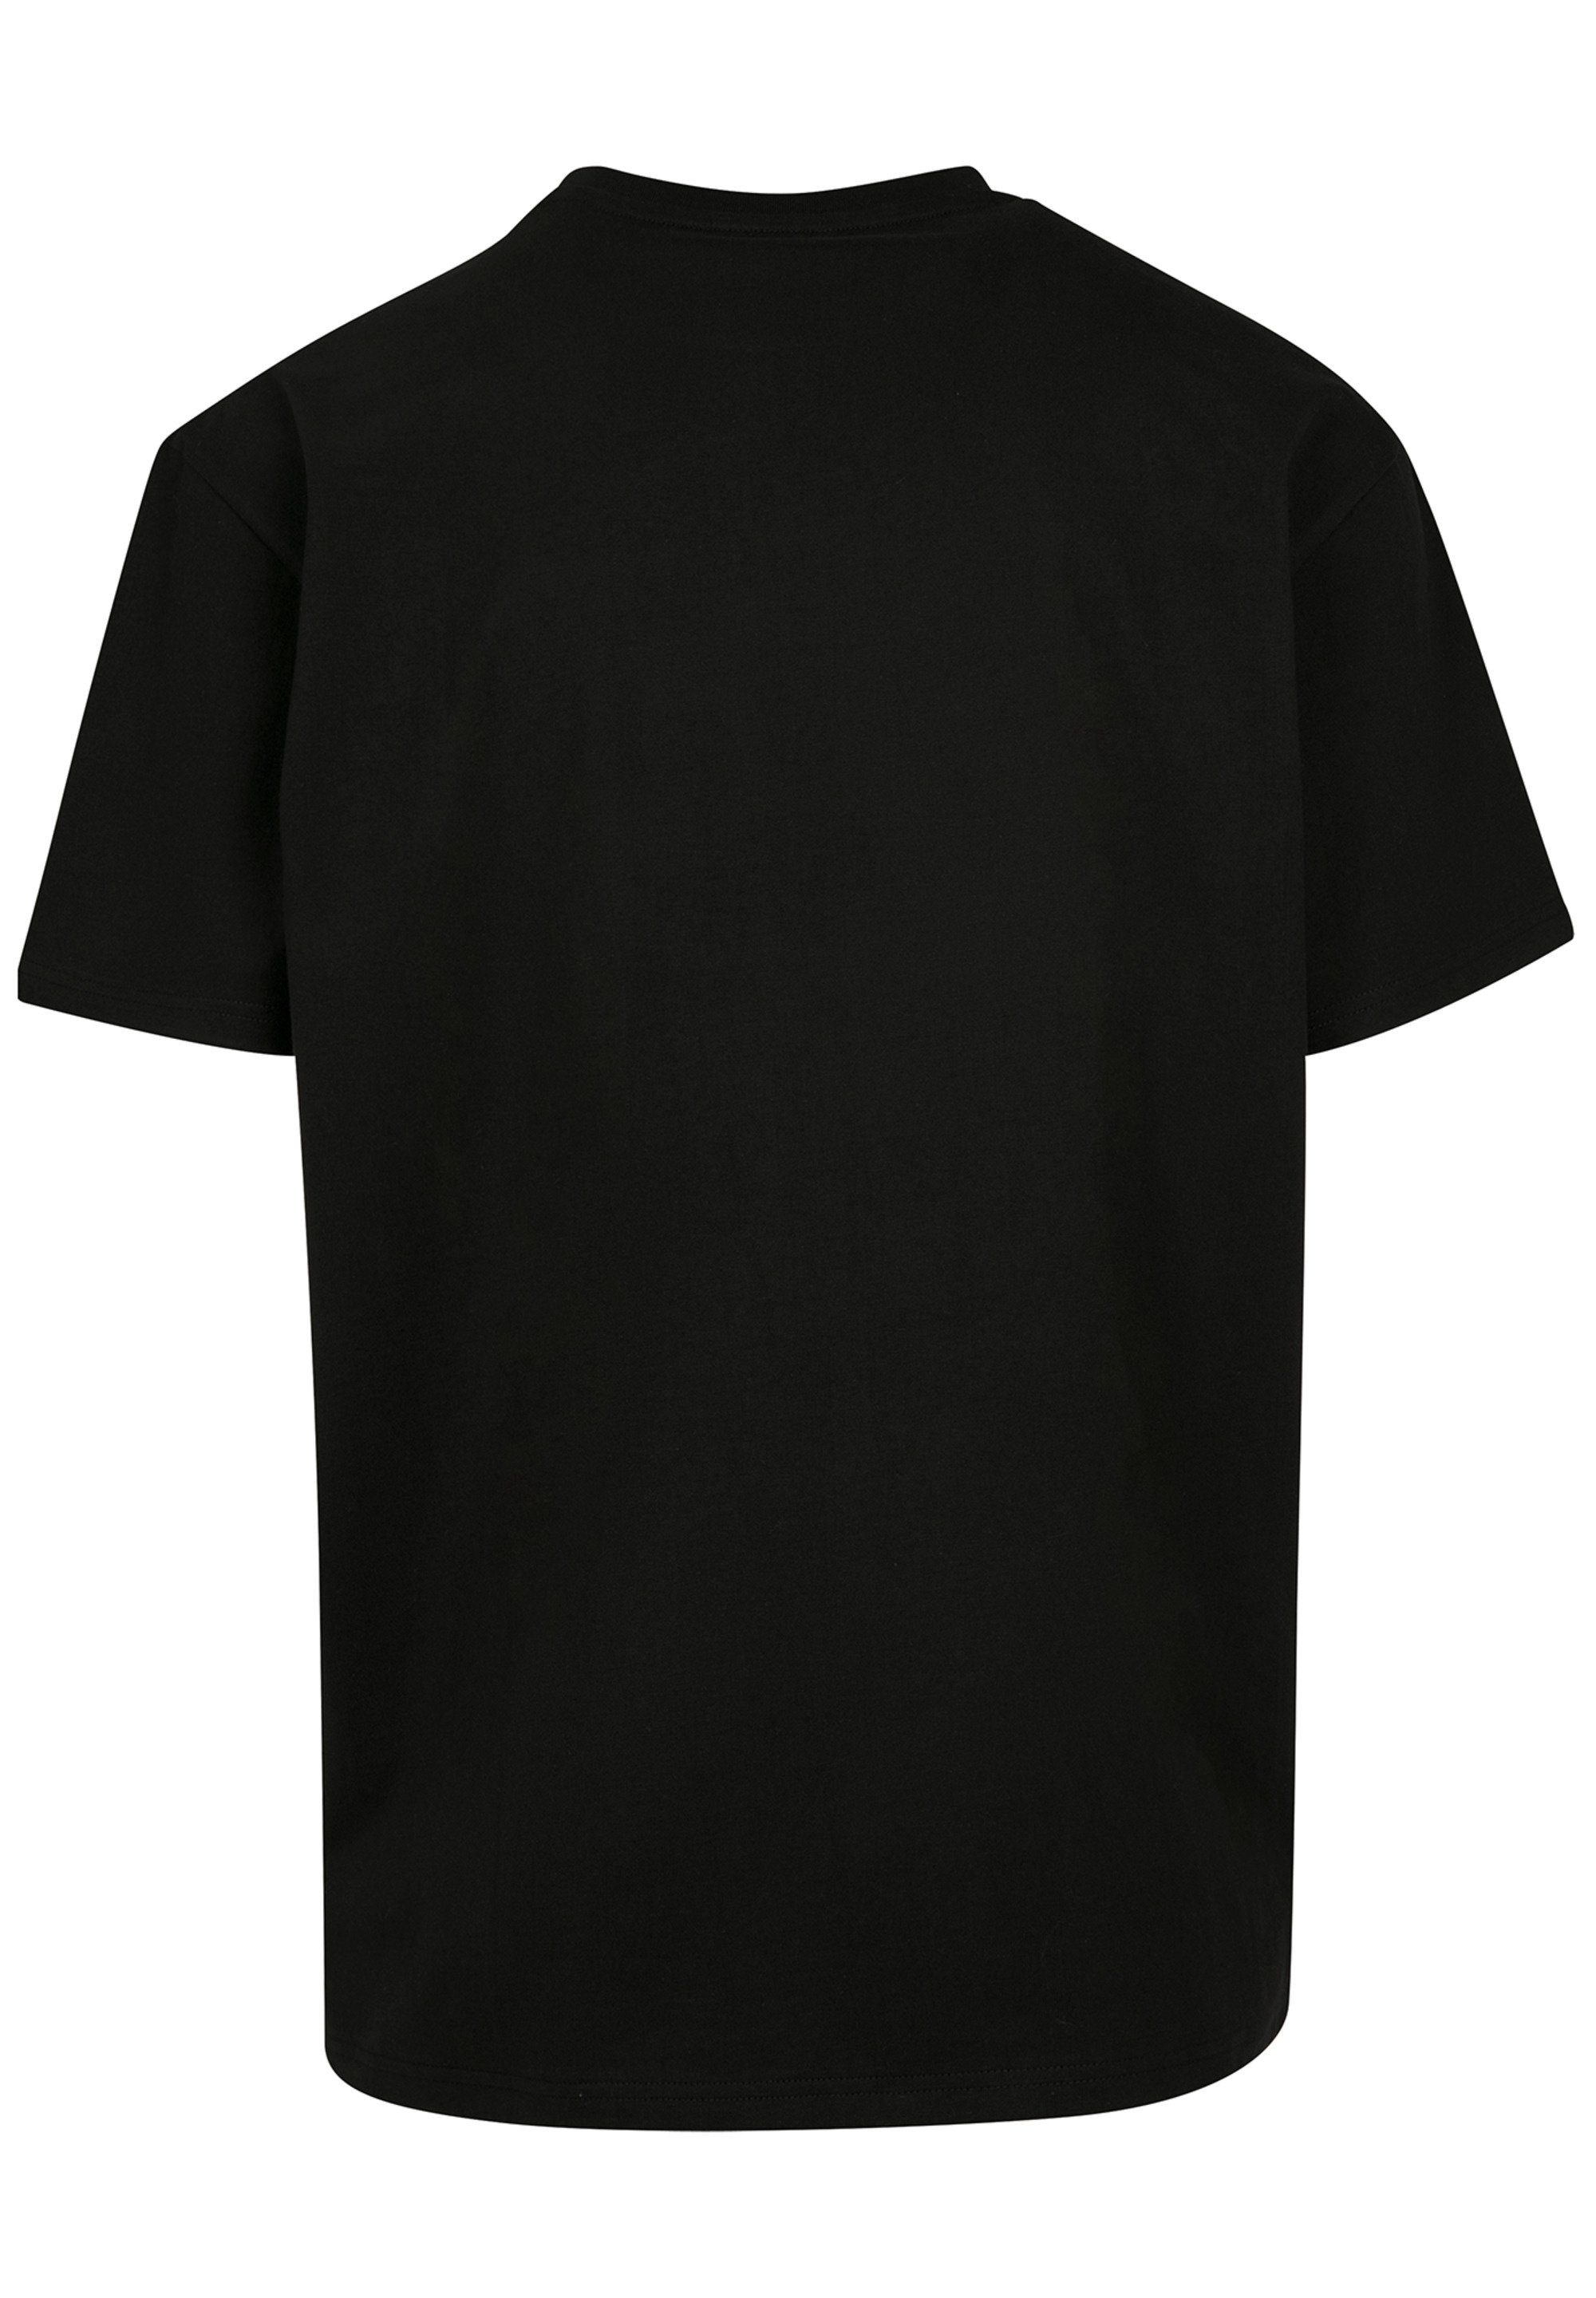 Queen Black T-Shirt F4NT4STIC Print Rockband Crest schwarz Classic